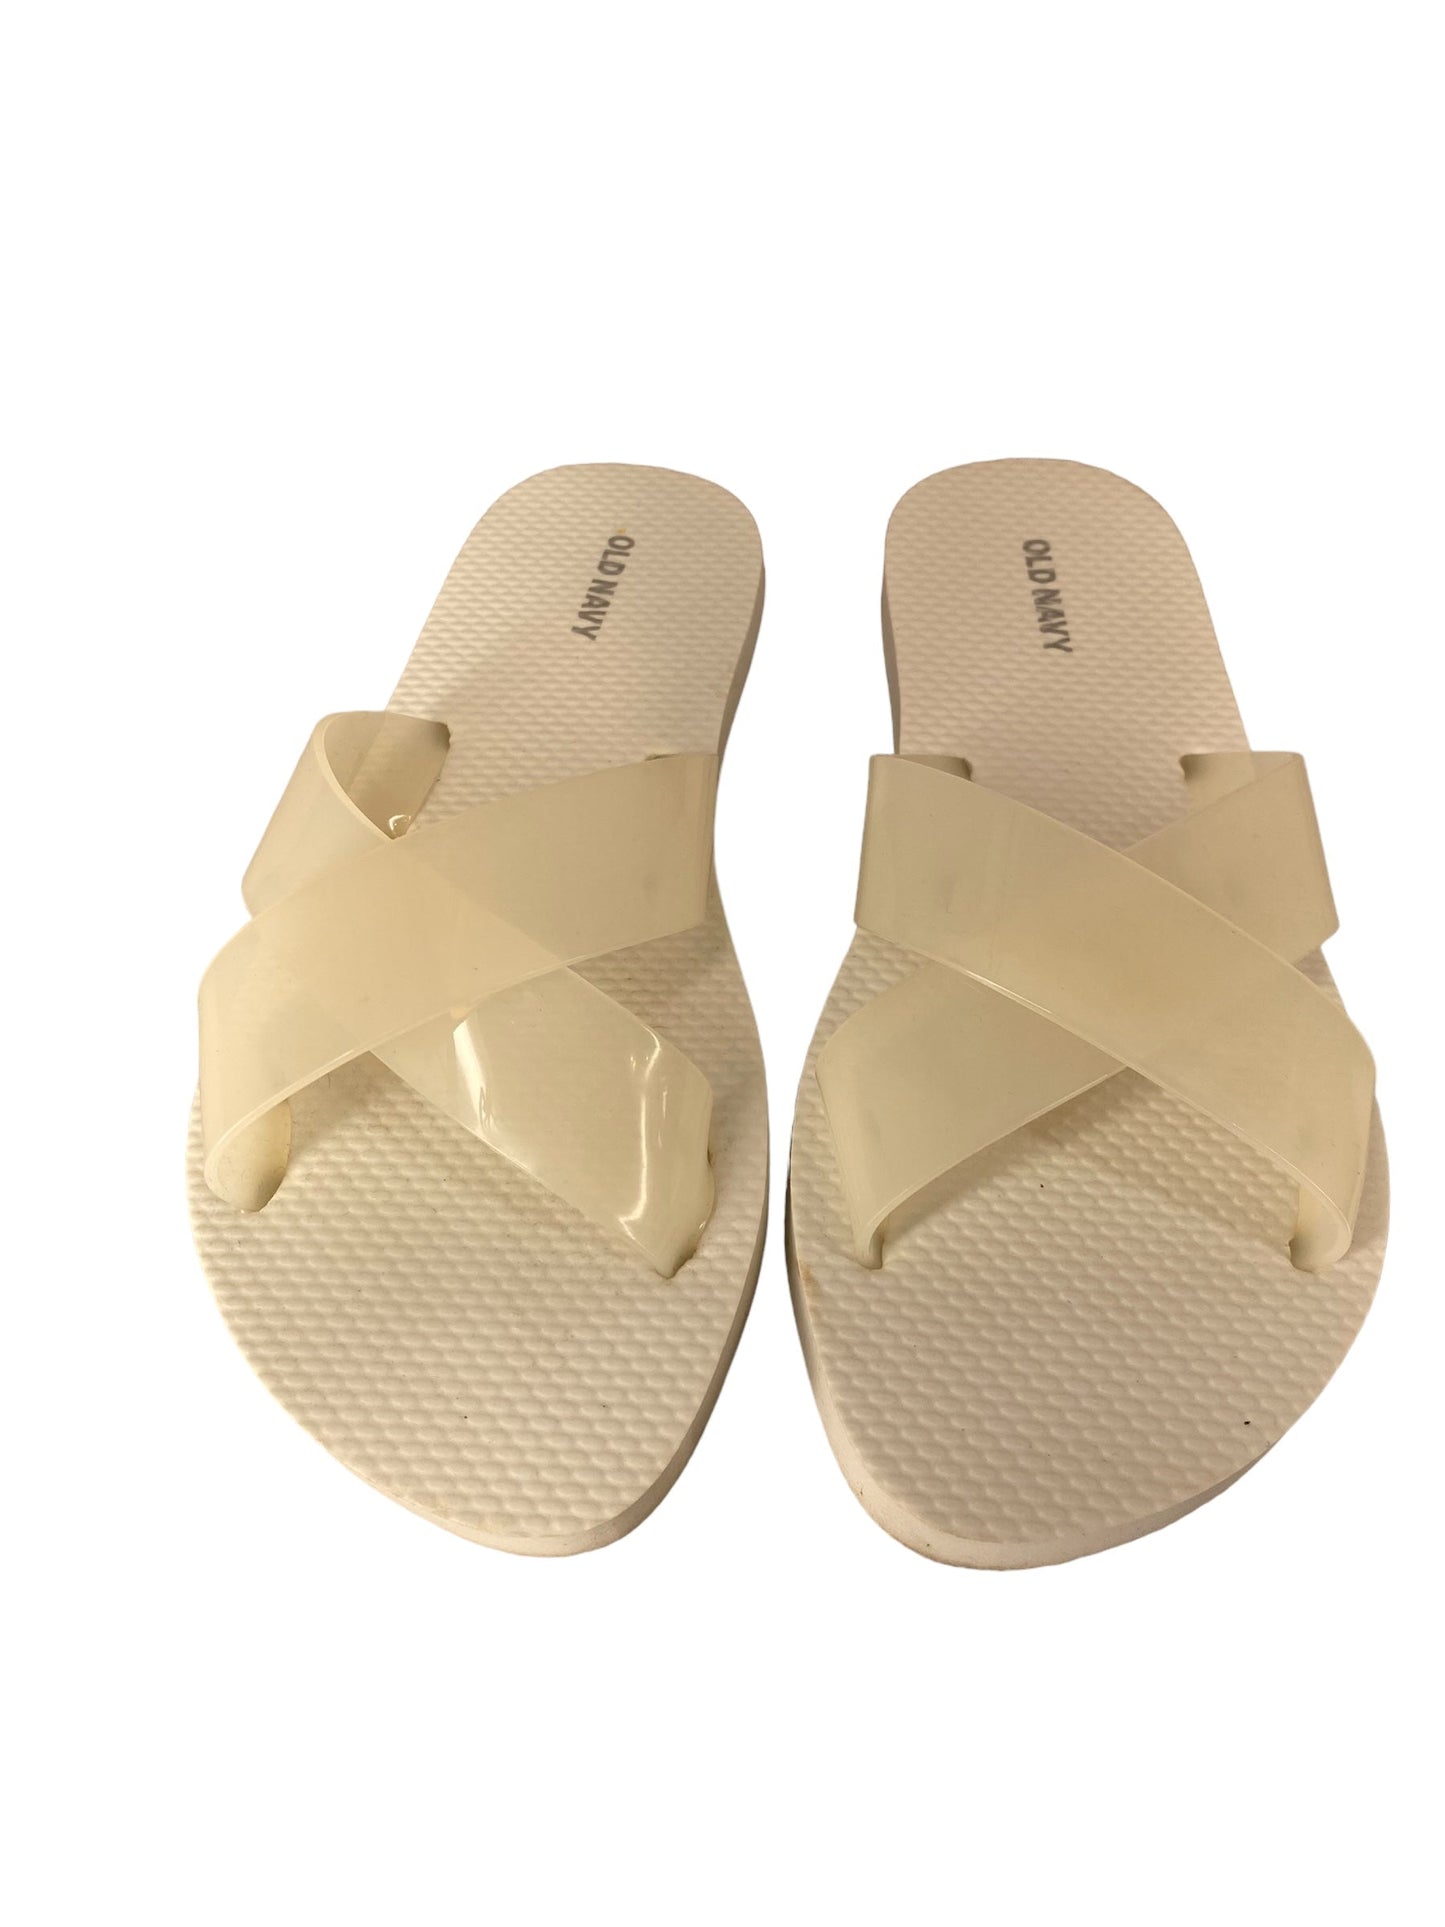 White Sandals Flip Flops Old Navy, Size 7